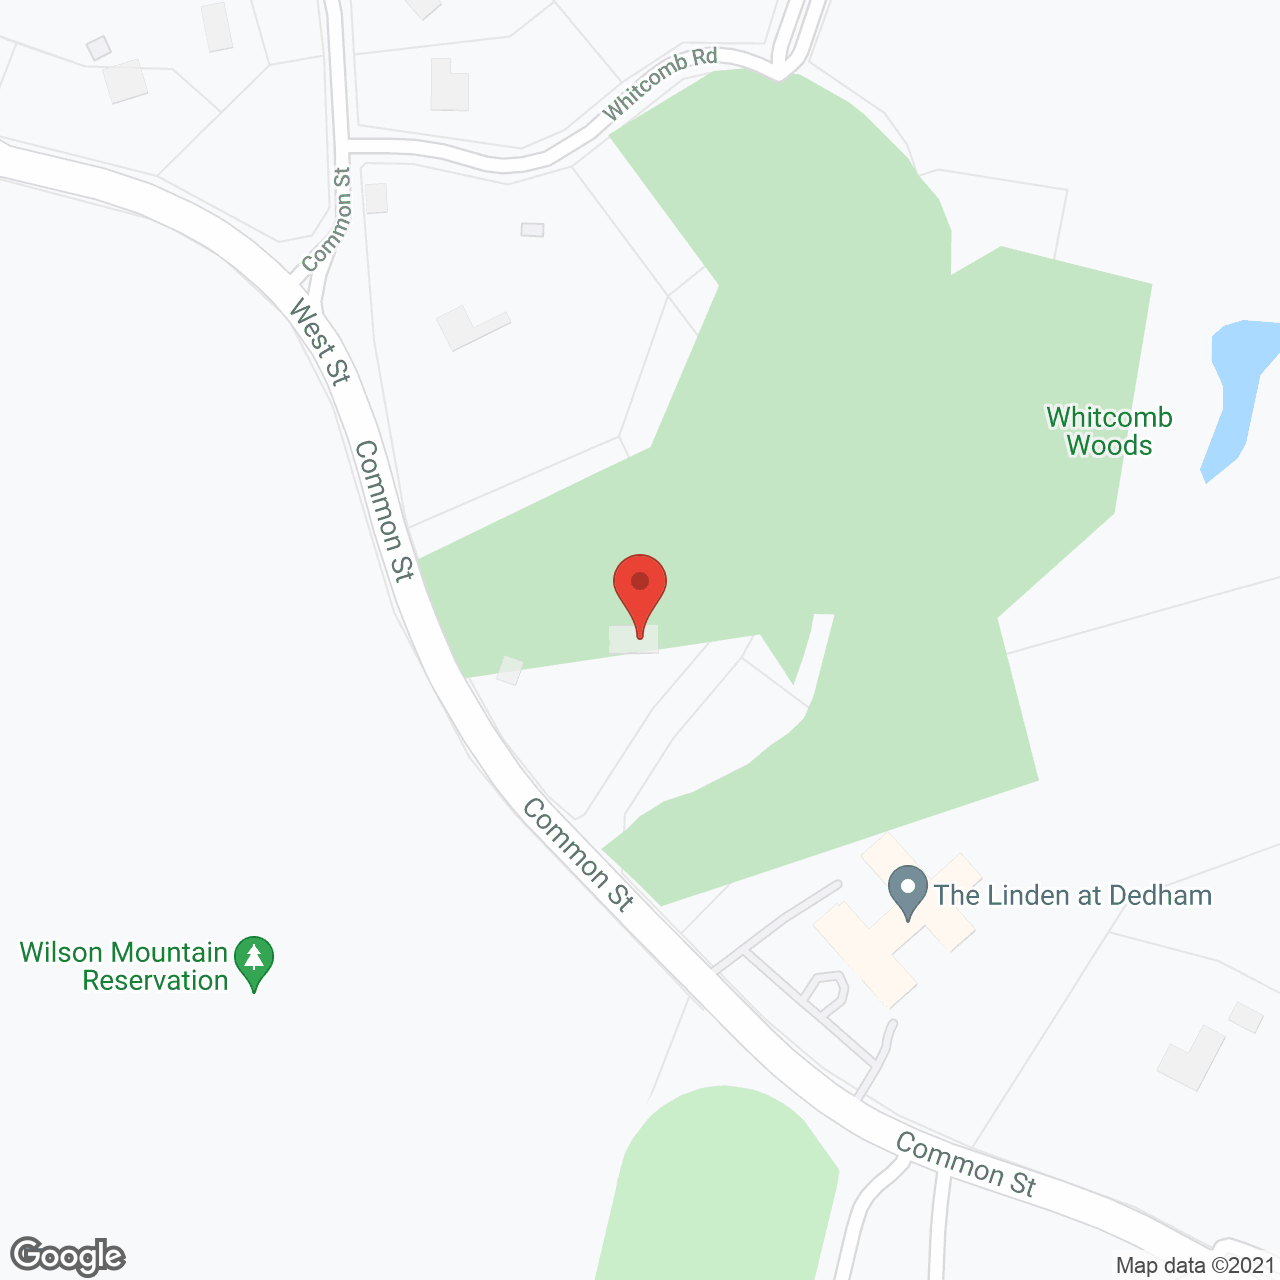 The Linden at Dedham in google map